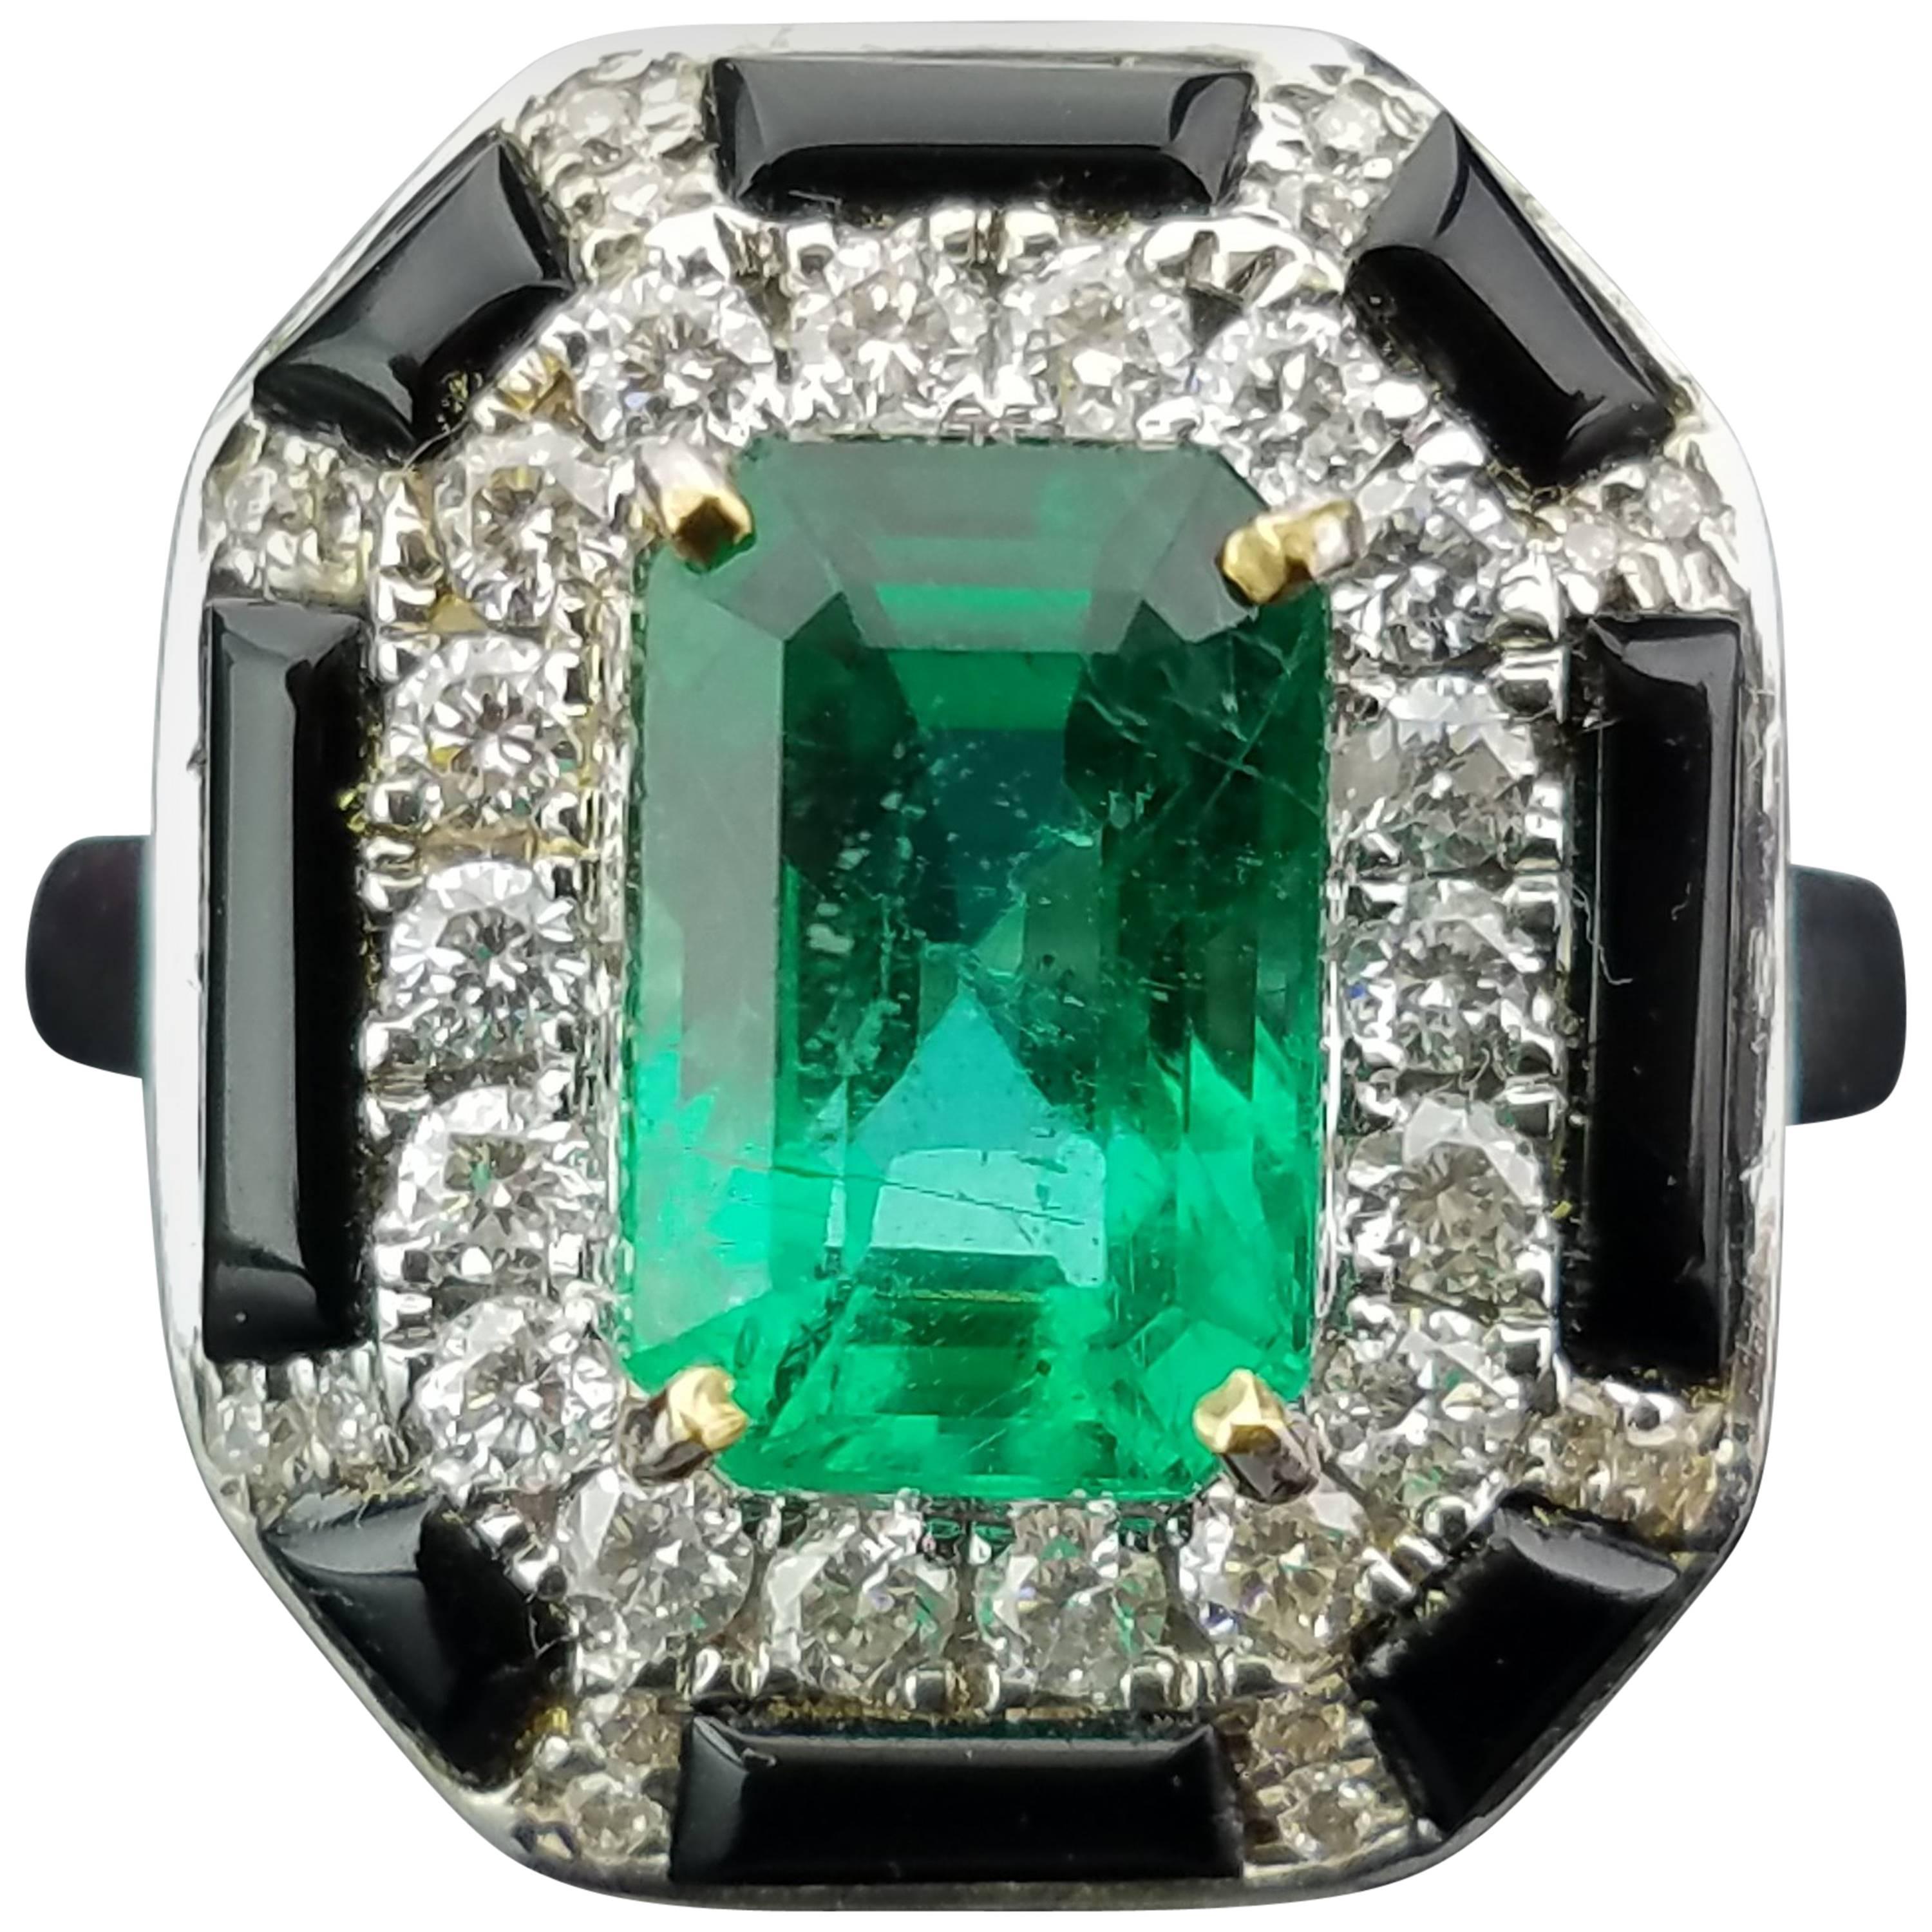 2.29 Carat Emerald, Enamel and Diamond Cocktail Ring